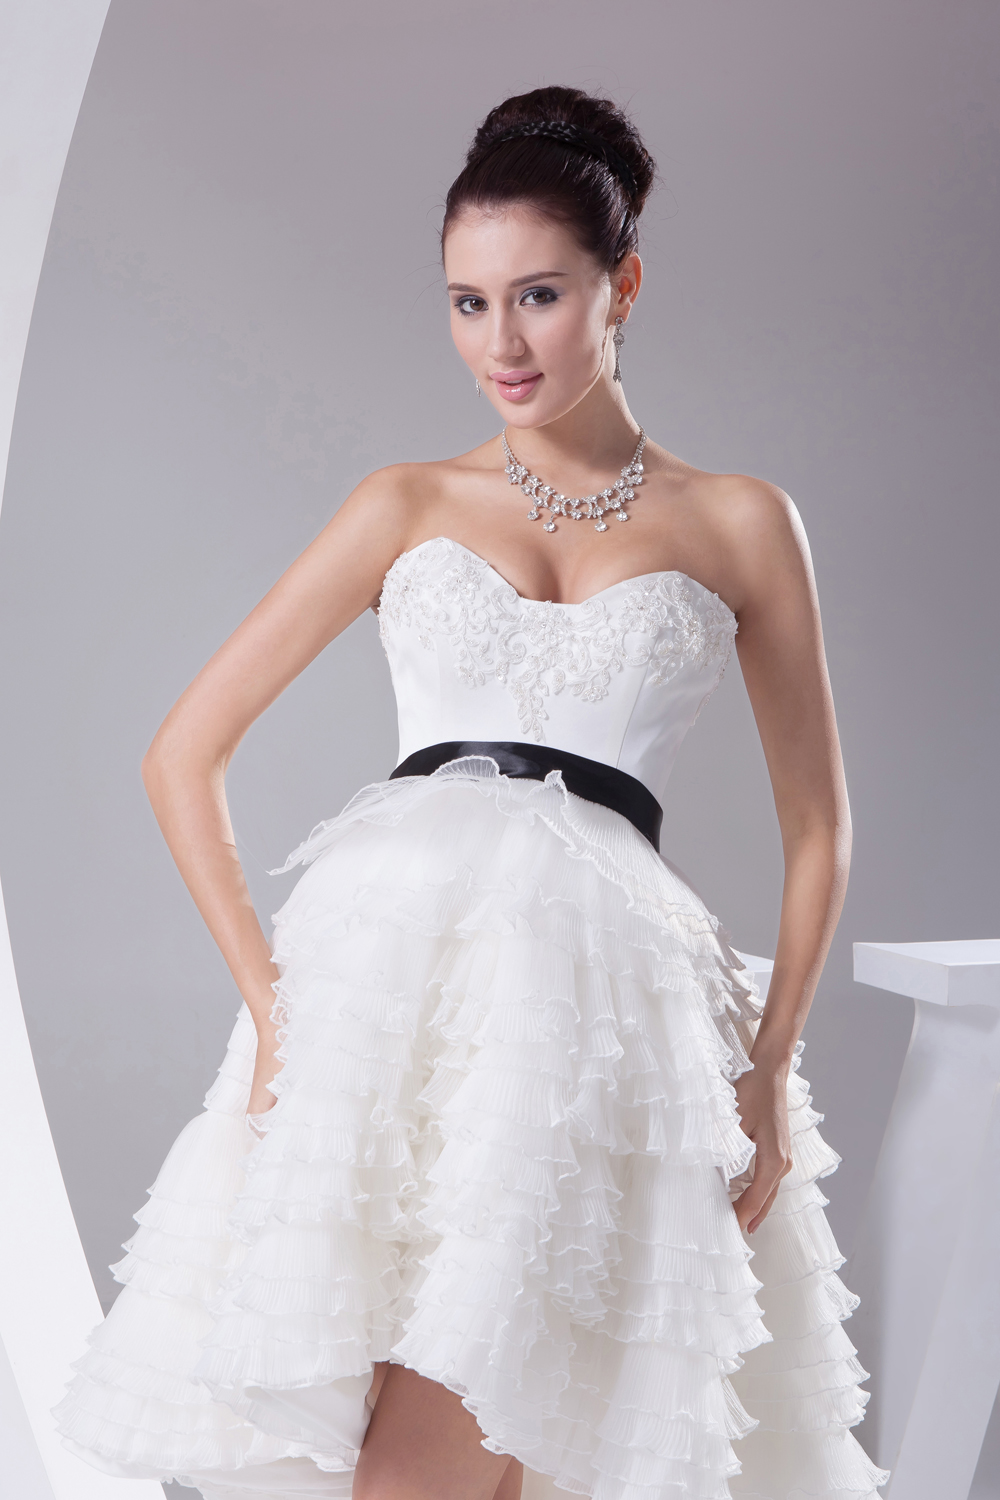 A-line / Princess Ruffled Layers Knee-length Sash Wedding Dress